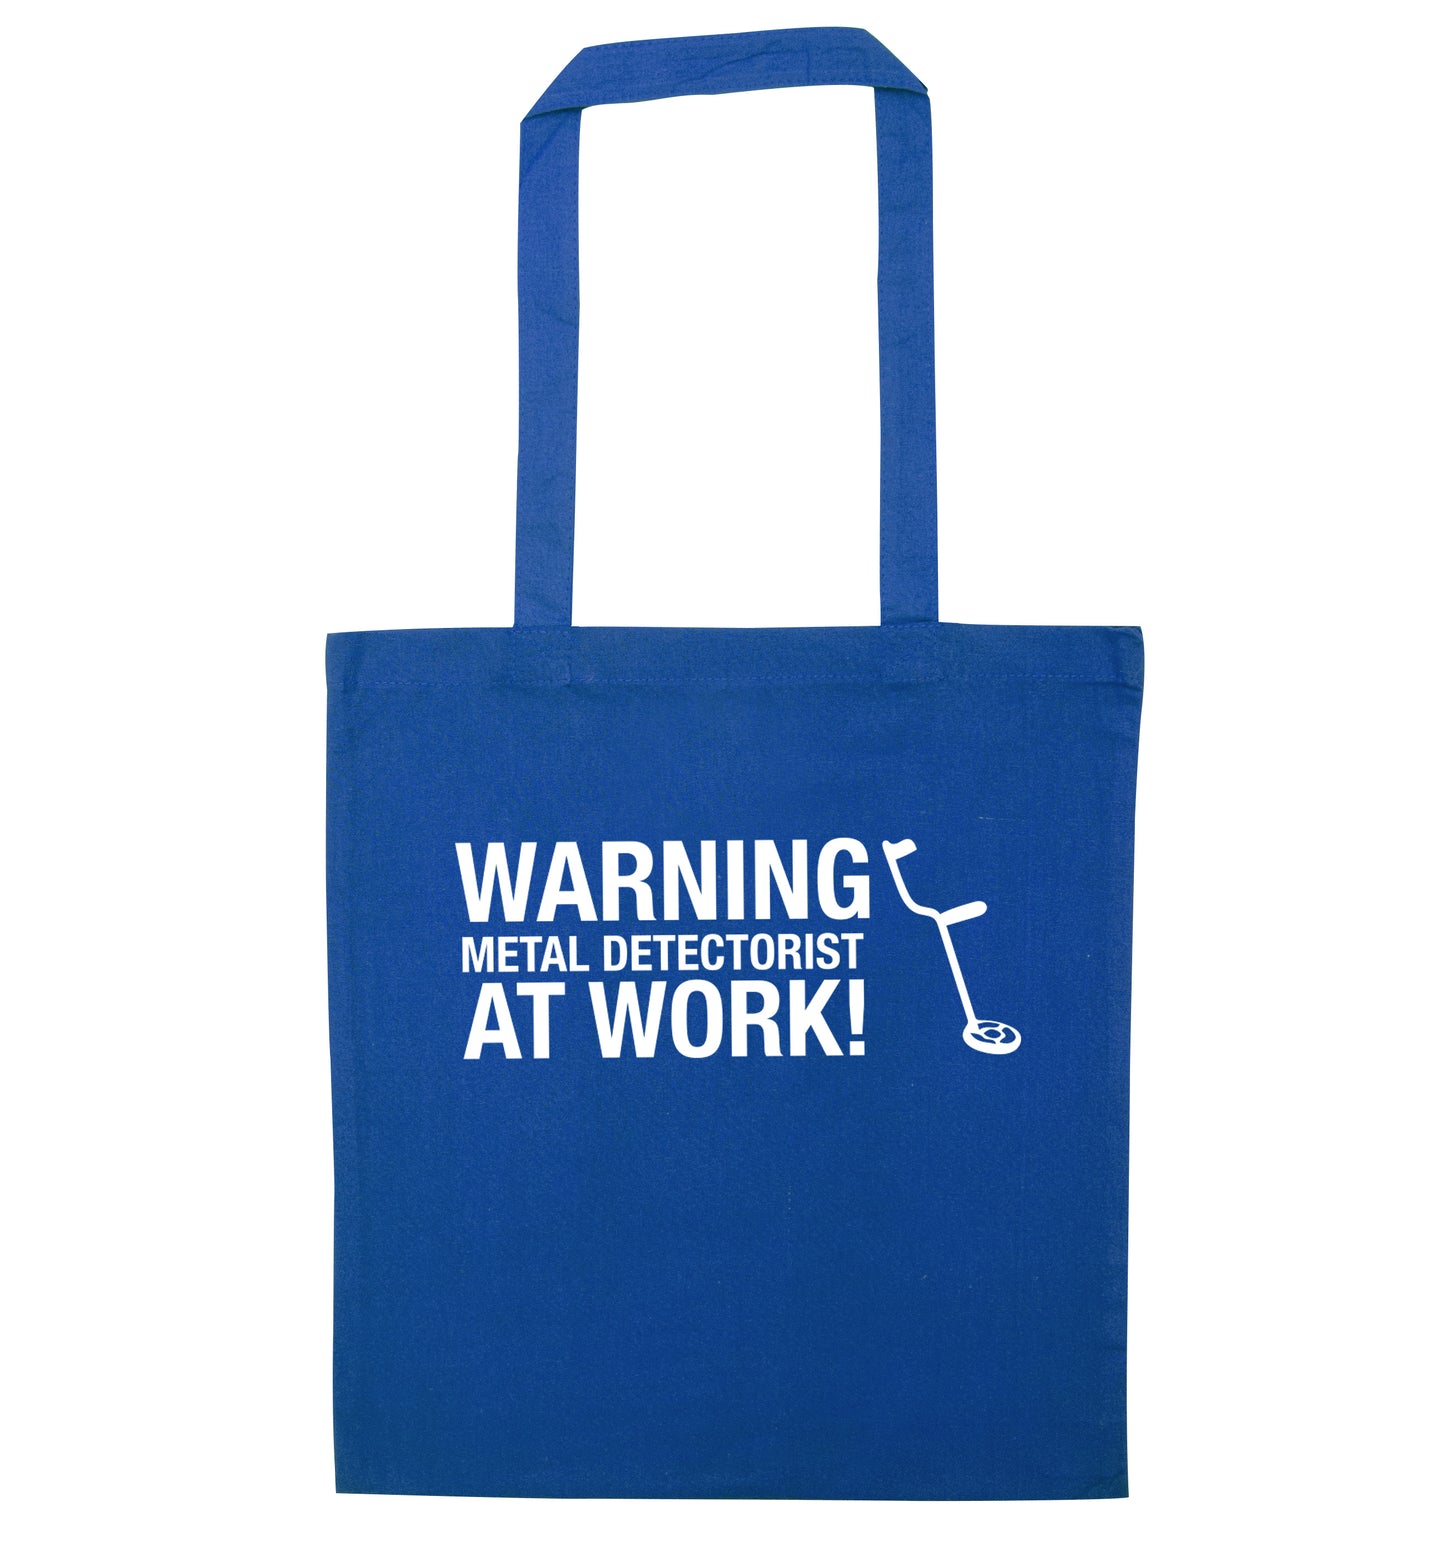 Warning metal detectorist at work! blue tote bag